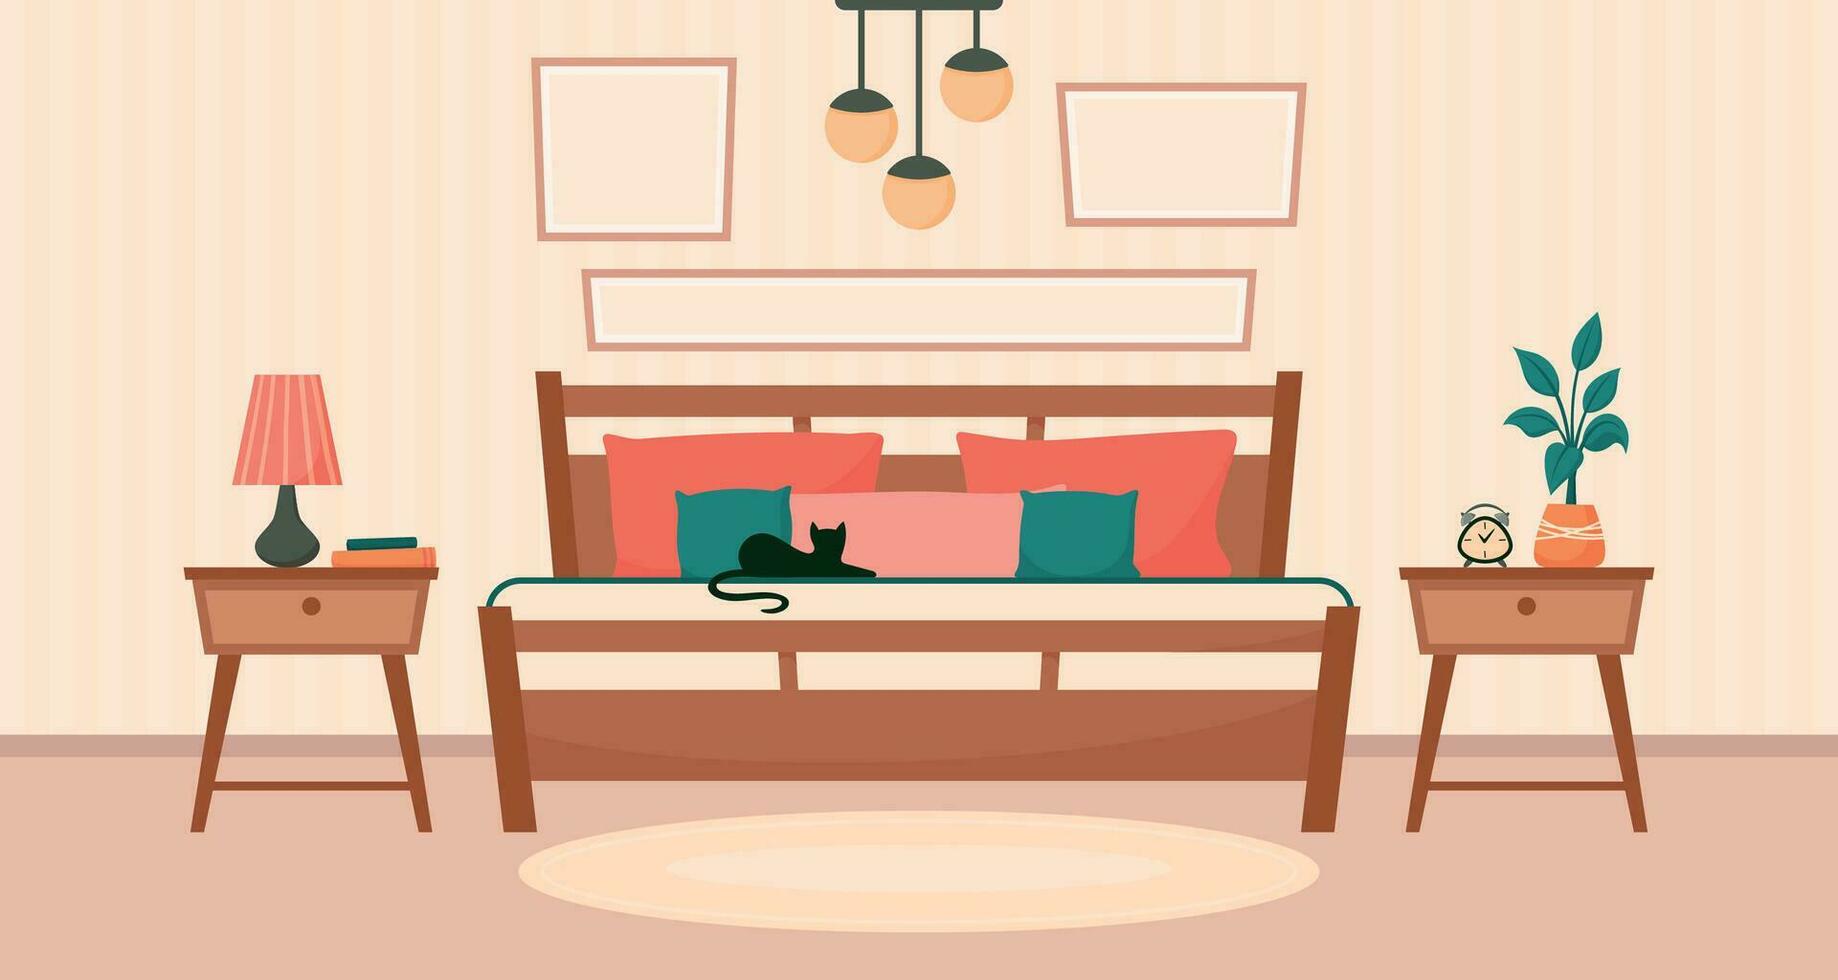 Cozy interior bedroom with bed, bedside tables, alarm clock, flowerpot, pendant light. Vector flat background template illustration